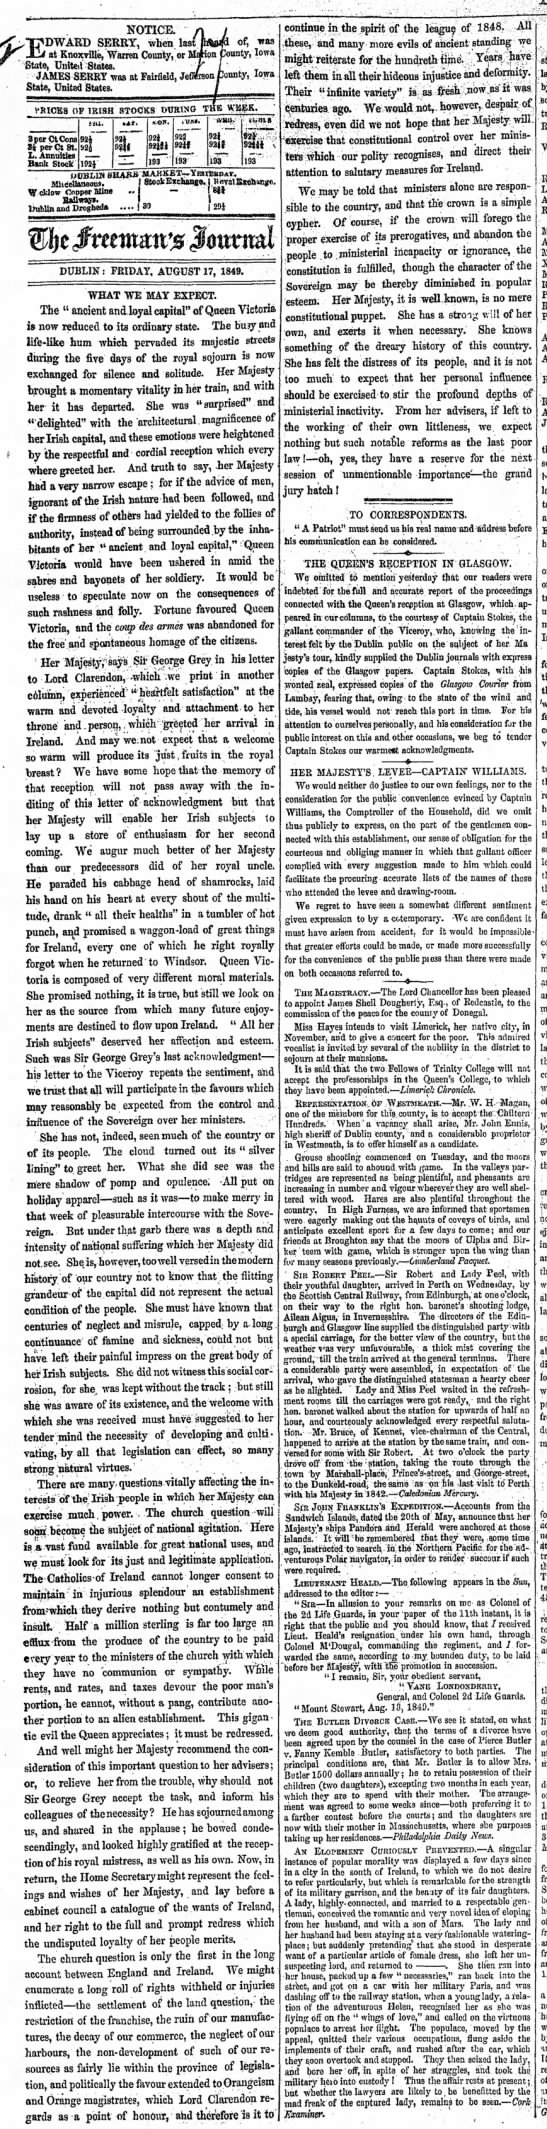 Editorial in Irish newspaper about Queen Victoria's visit to Ireland in 1849 - 